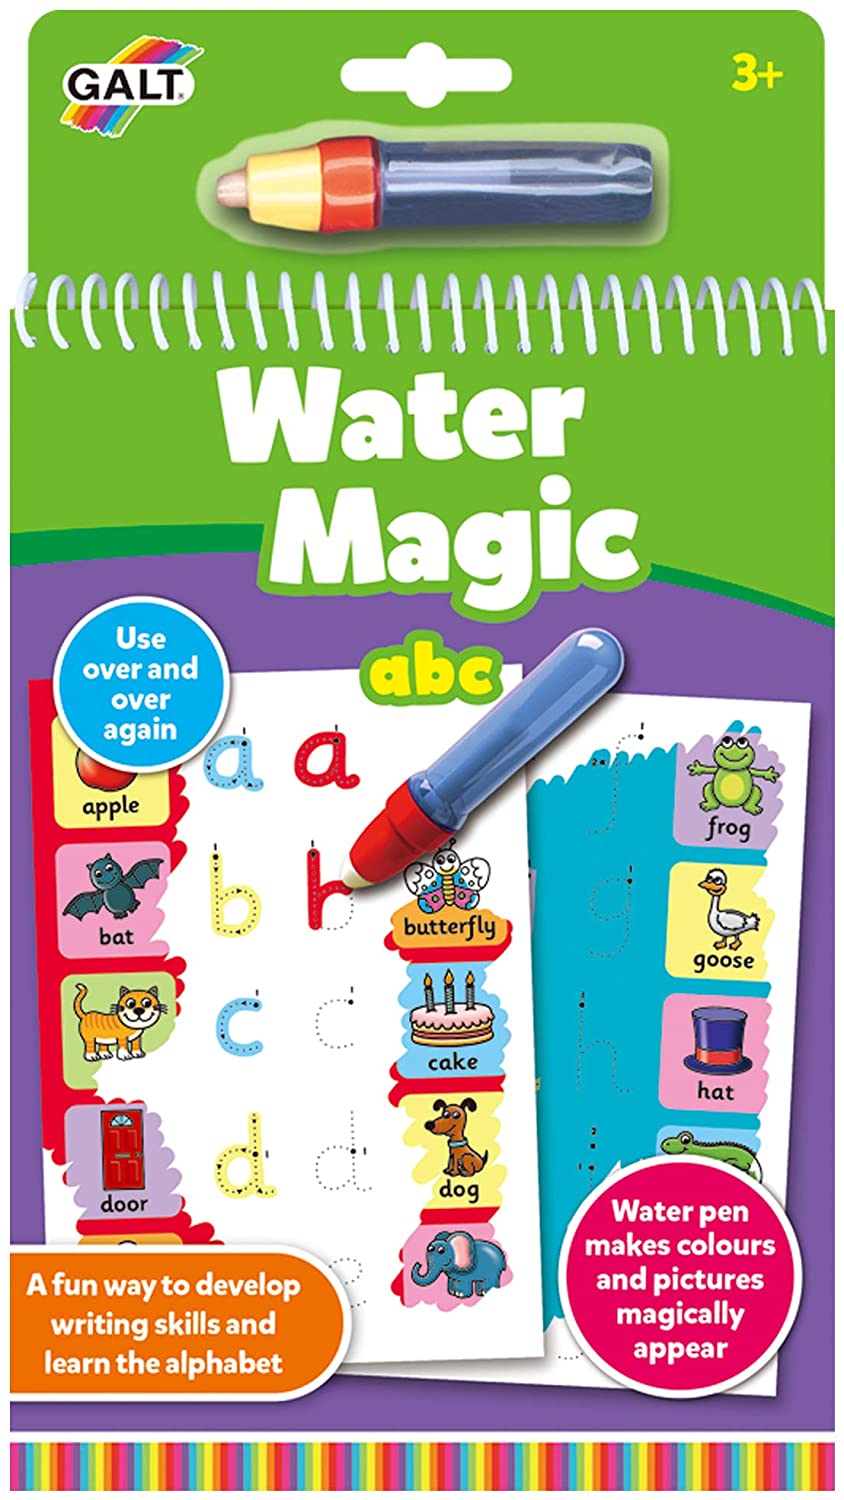 Galt Water Magic - Abc